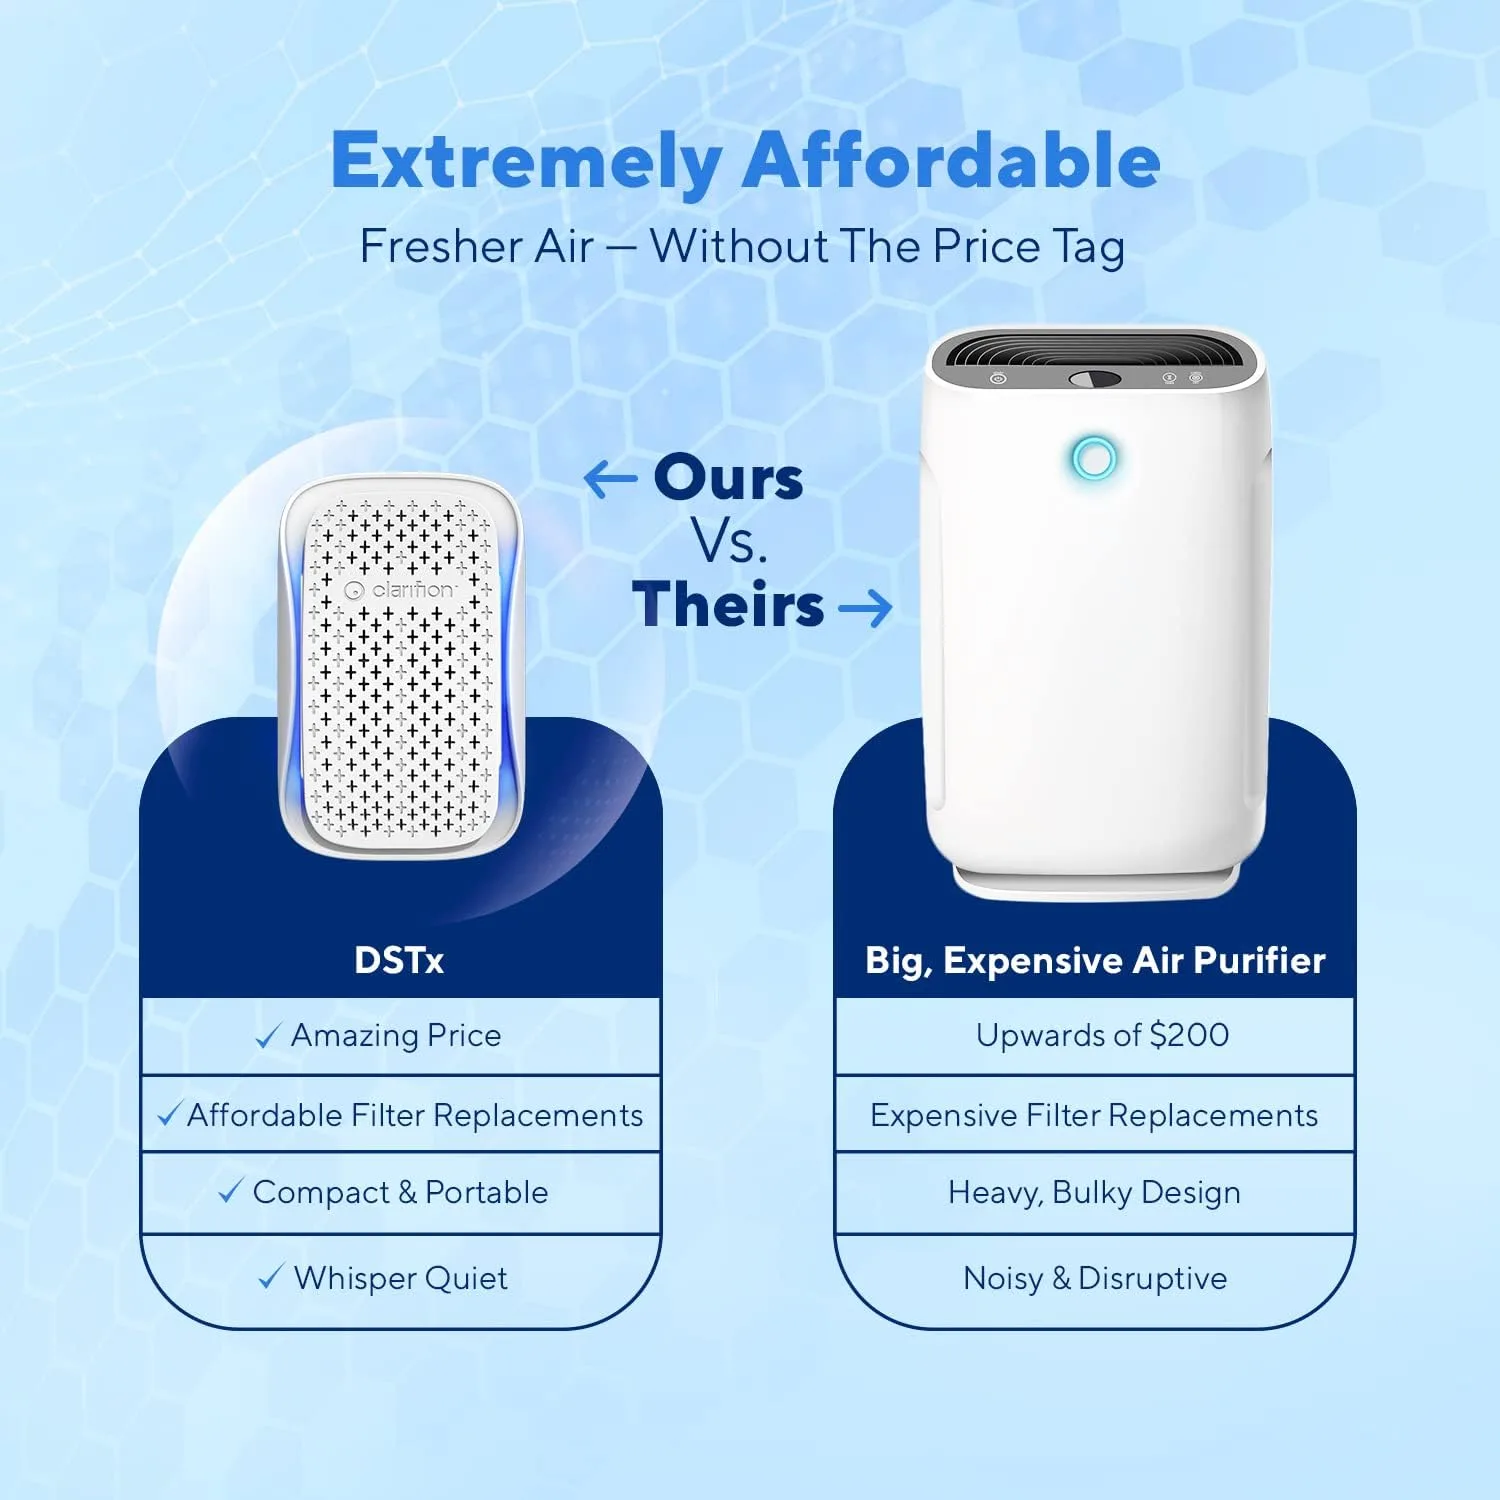 clarifion dstx air purifier review jpg